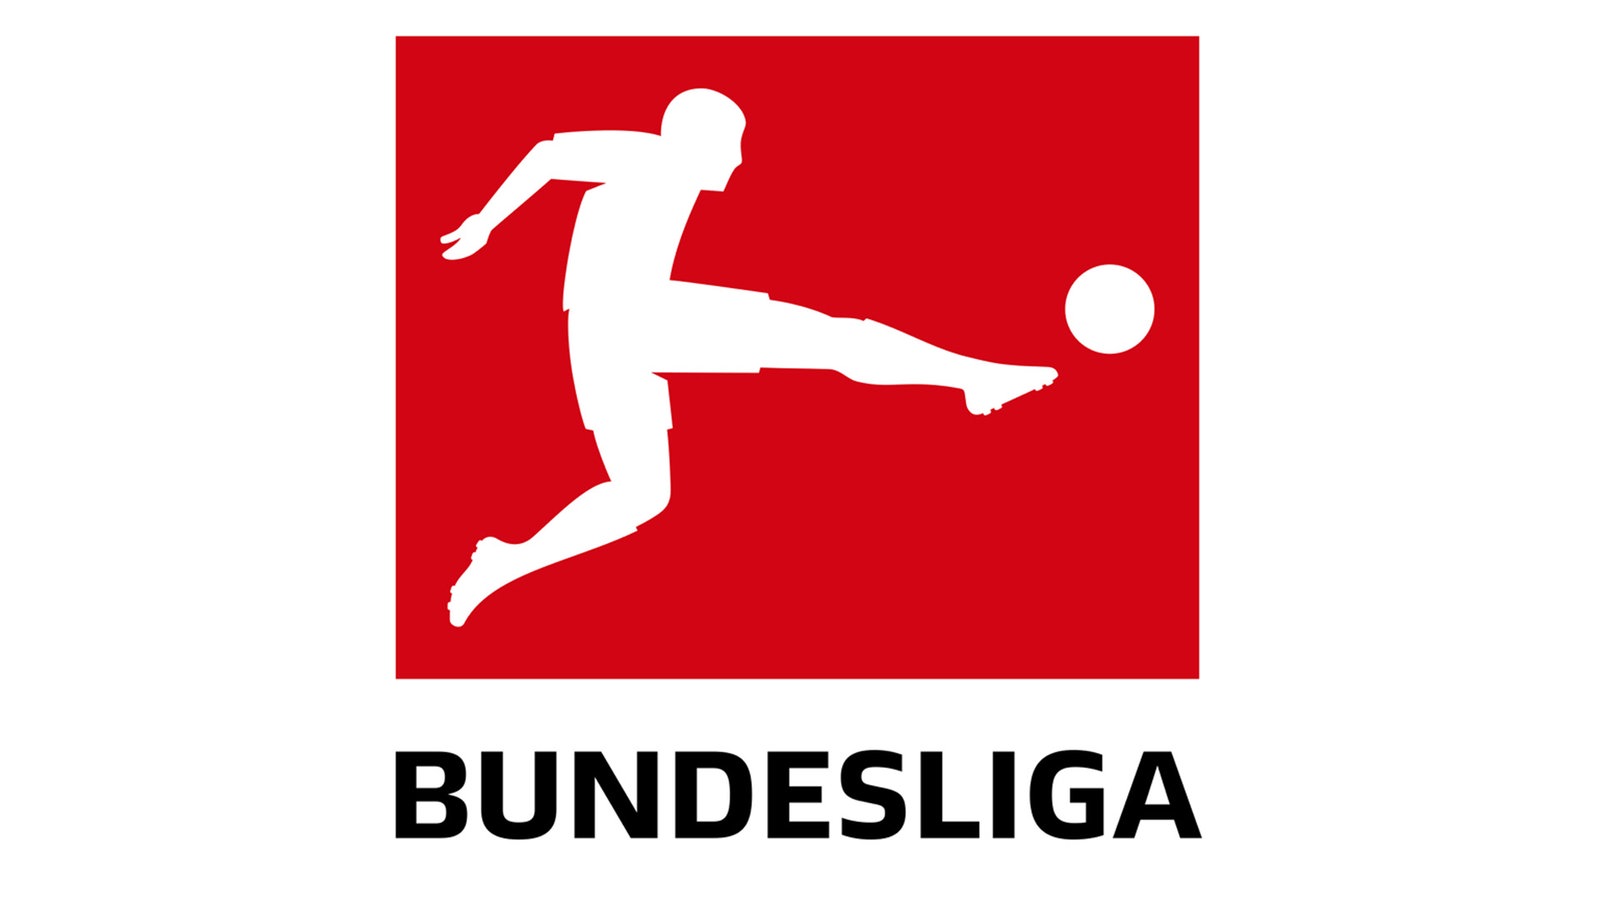 Bundesliga Logo / Football teams shirt and kits fan: New Rebranding ...